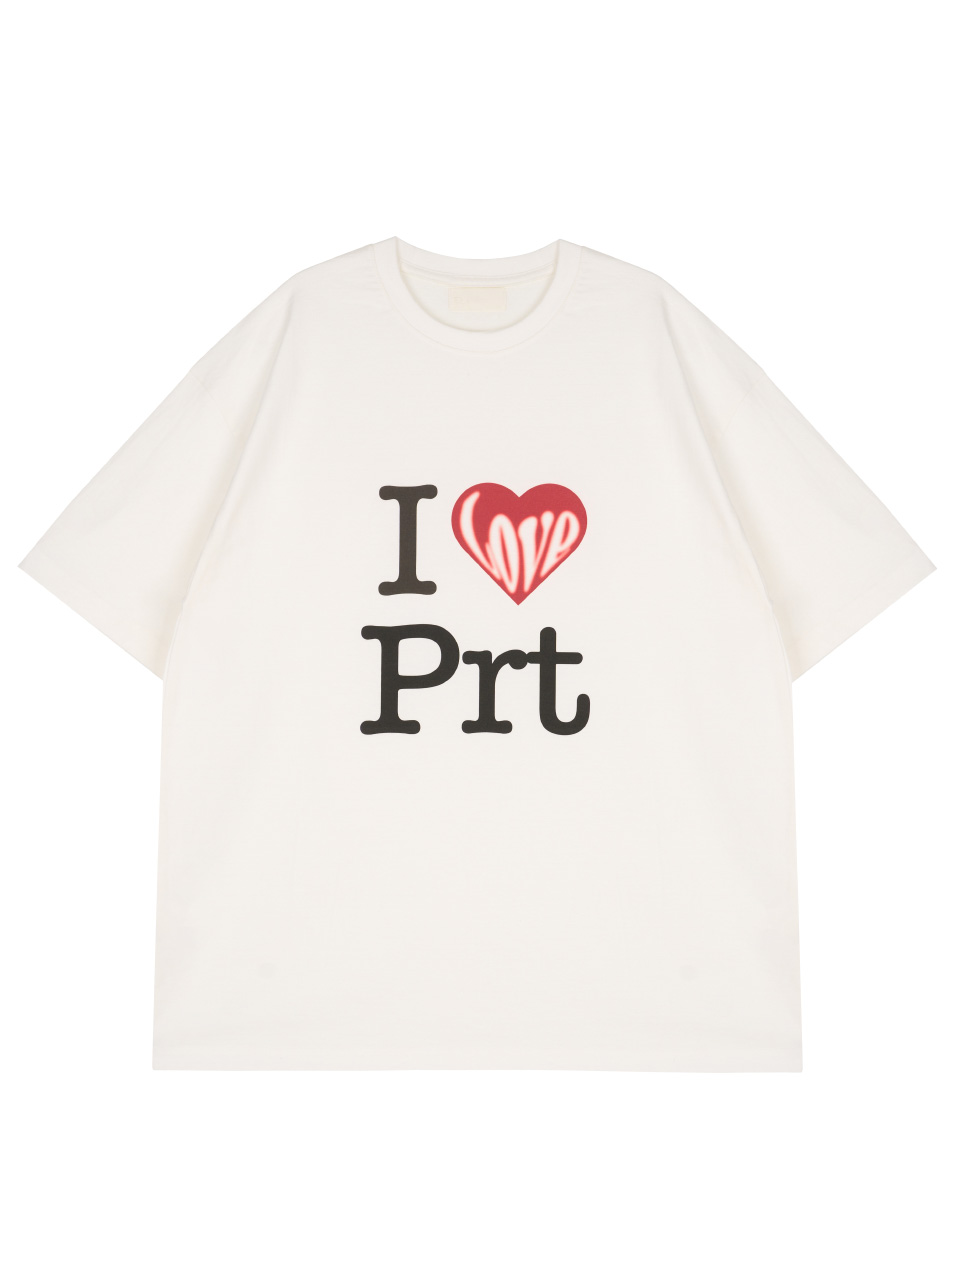 PRTPRT SHOP - I LOVE PRT T SHIRT (WHITE)